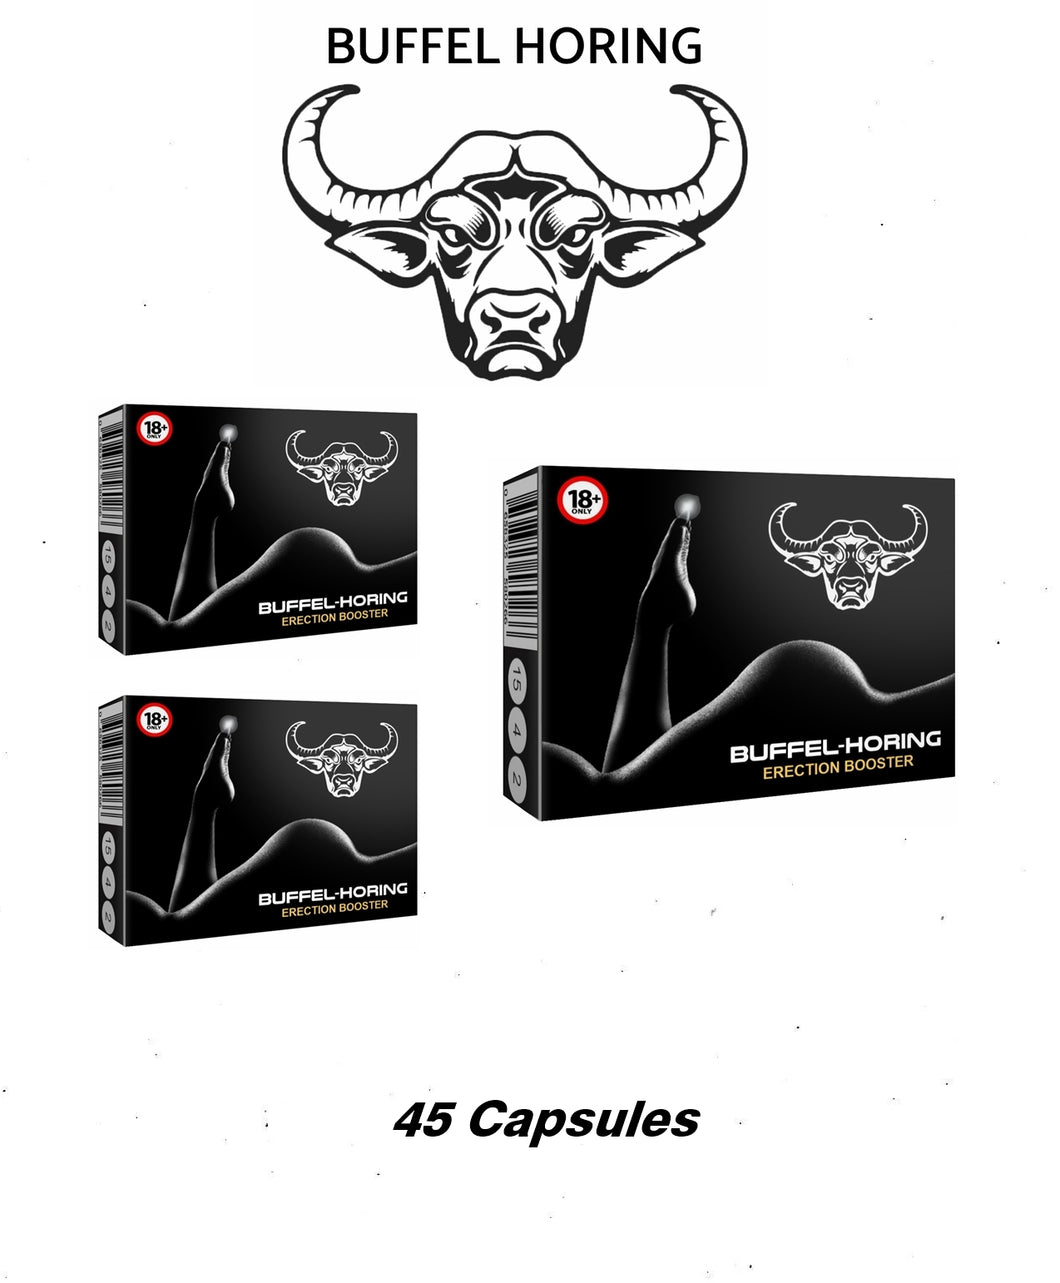 Buffel-Horing(3 Boxes) - 45 Capsules